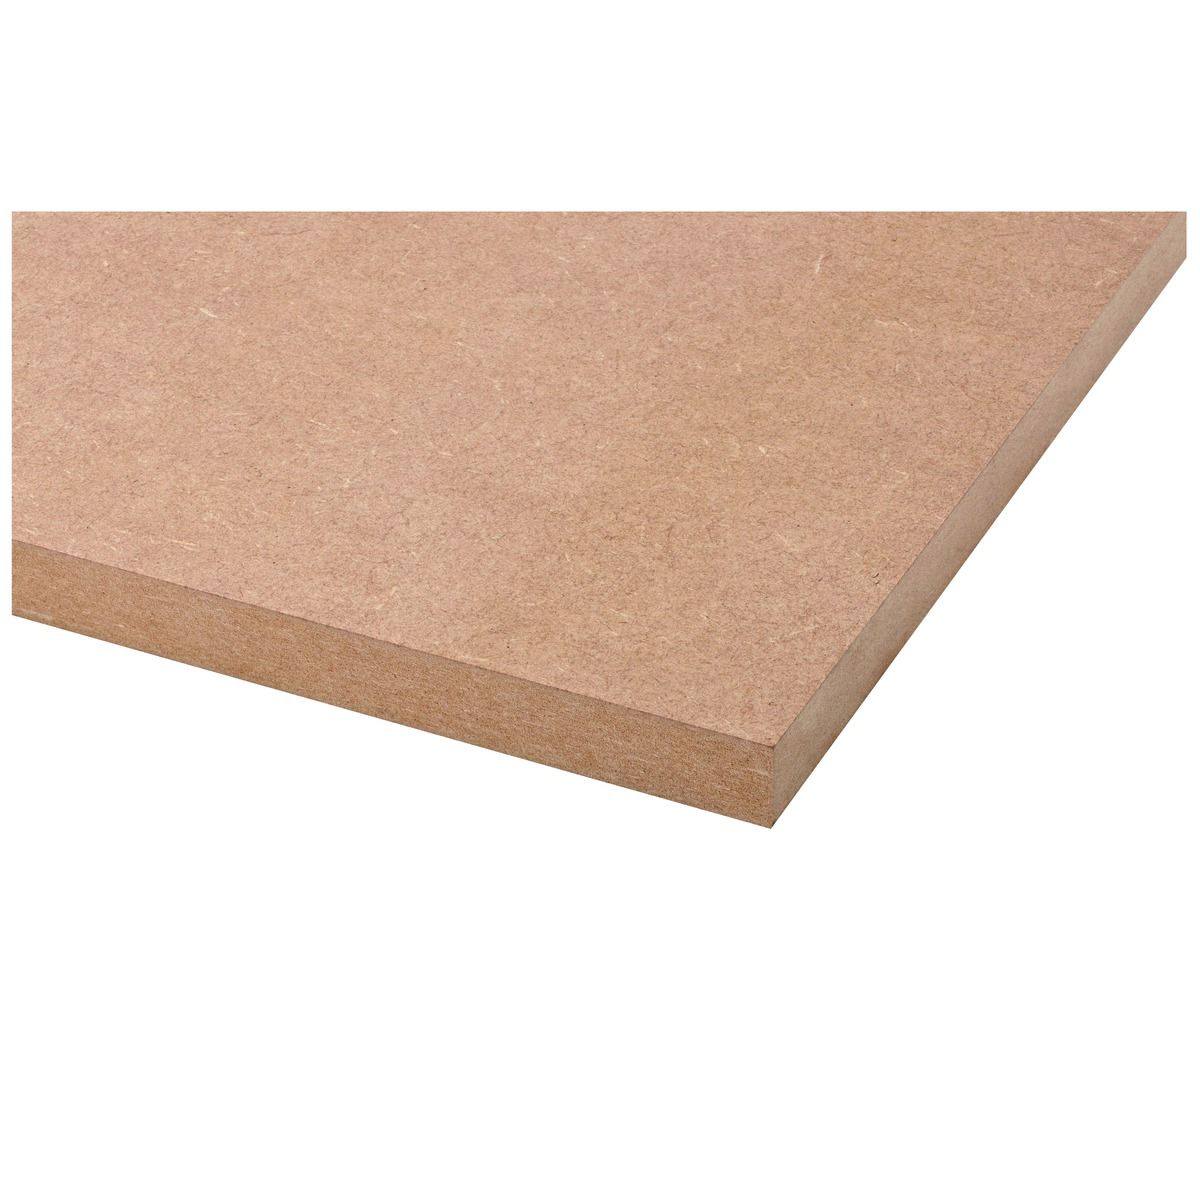 Image of Wickes General Purpose Medium Density Fibreboard (MDF) Board - 6 x 607 x 1829mm